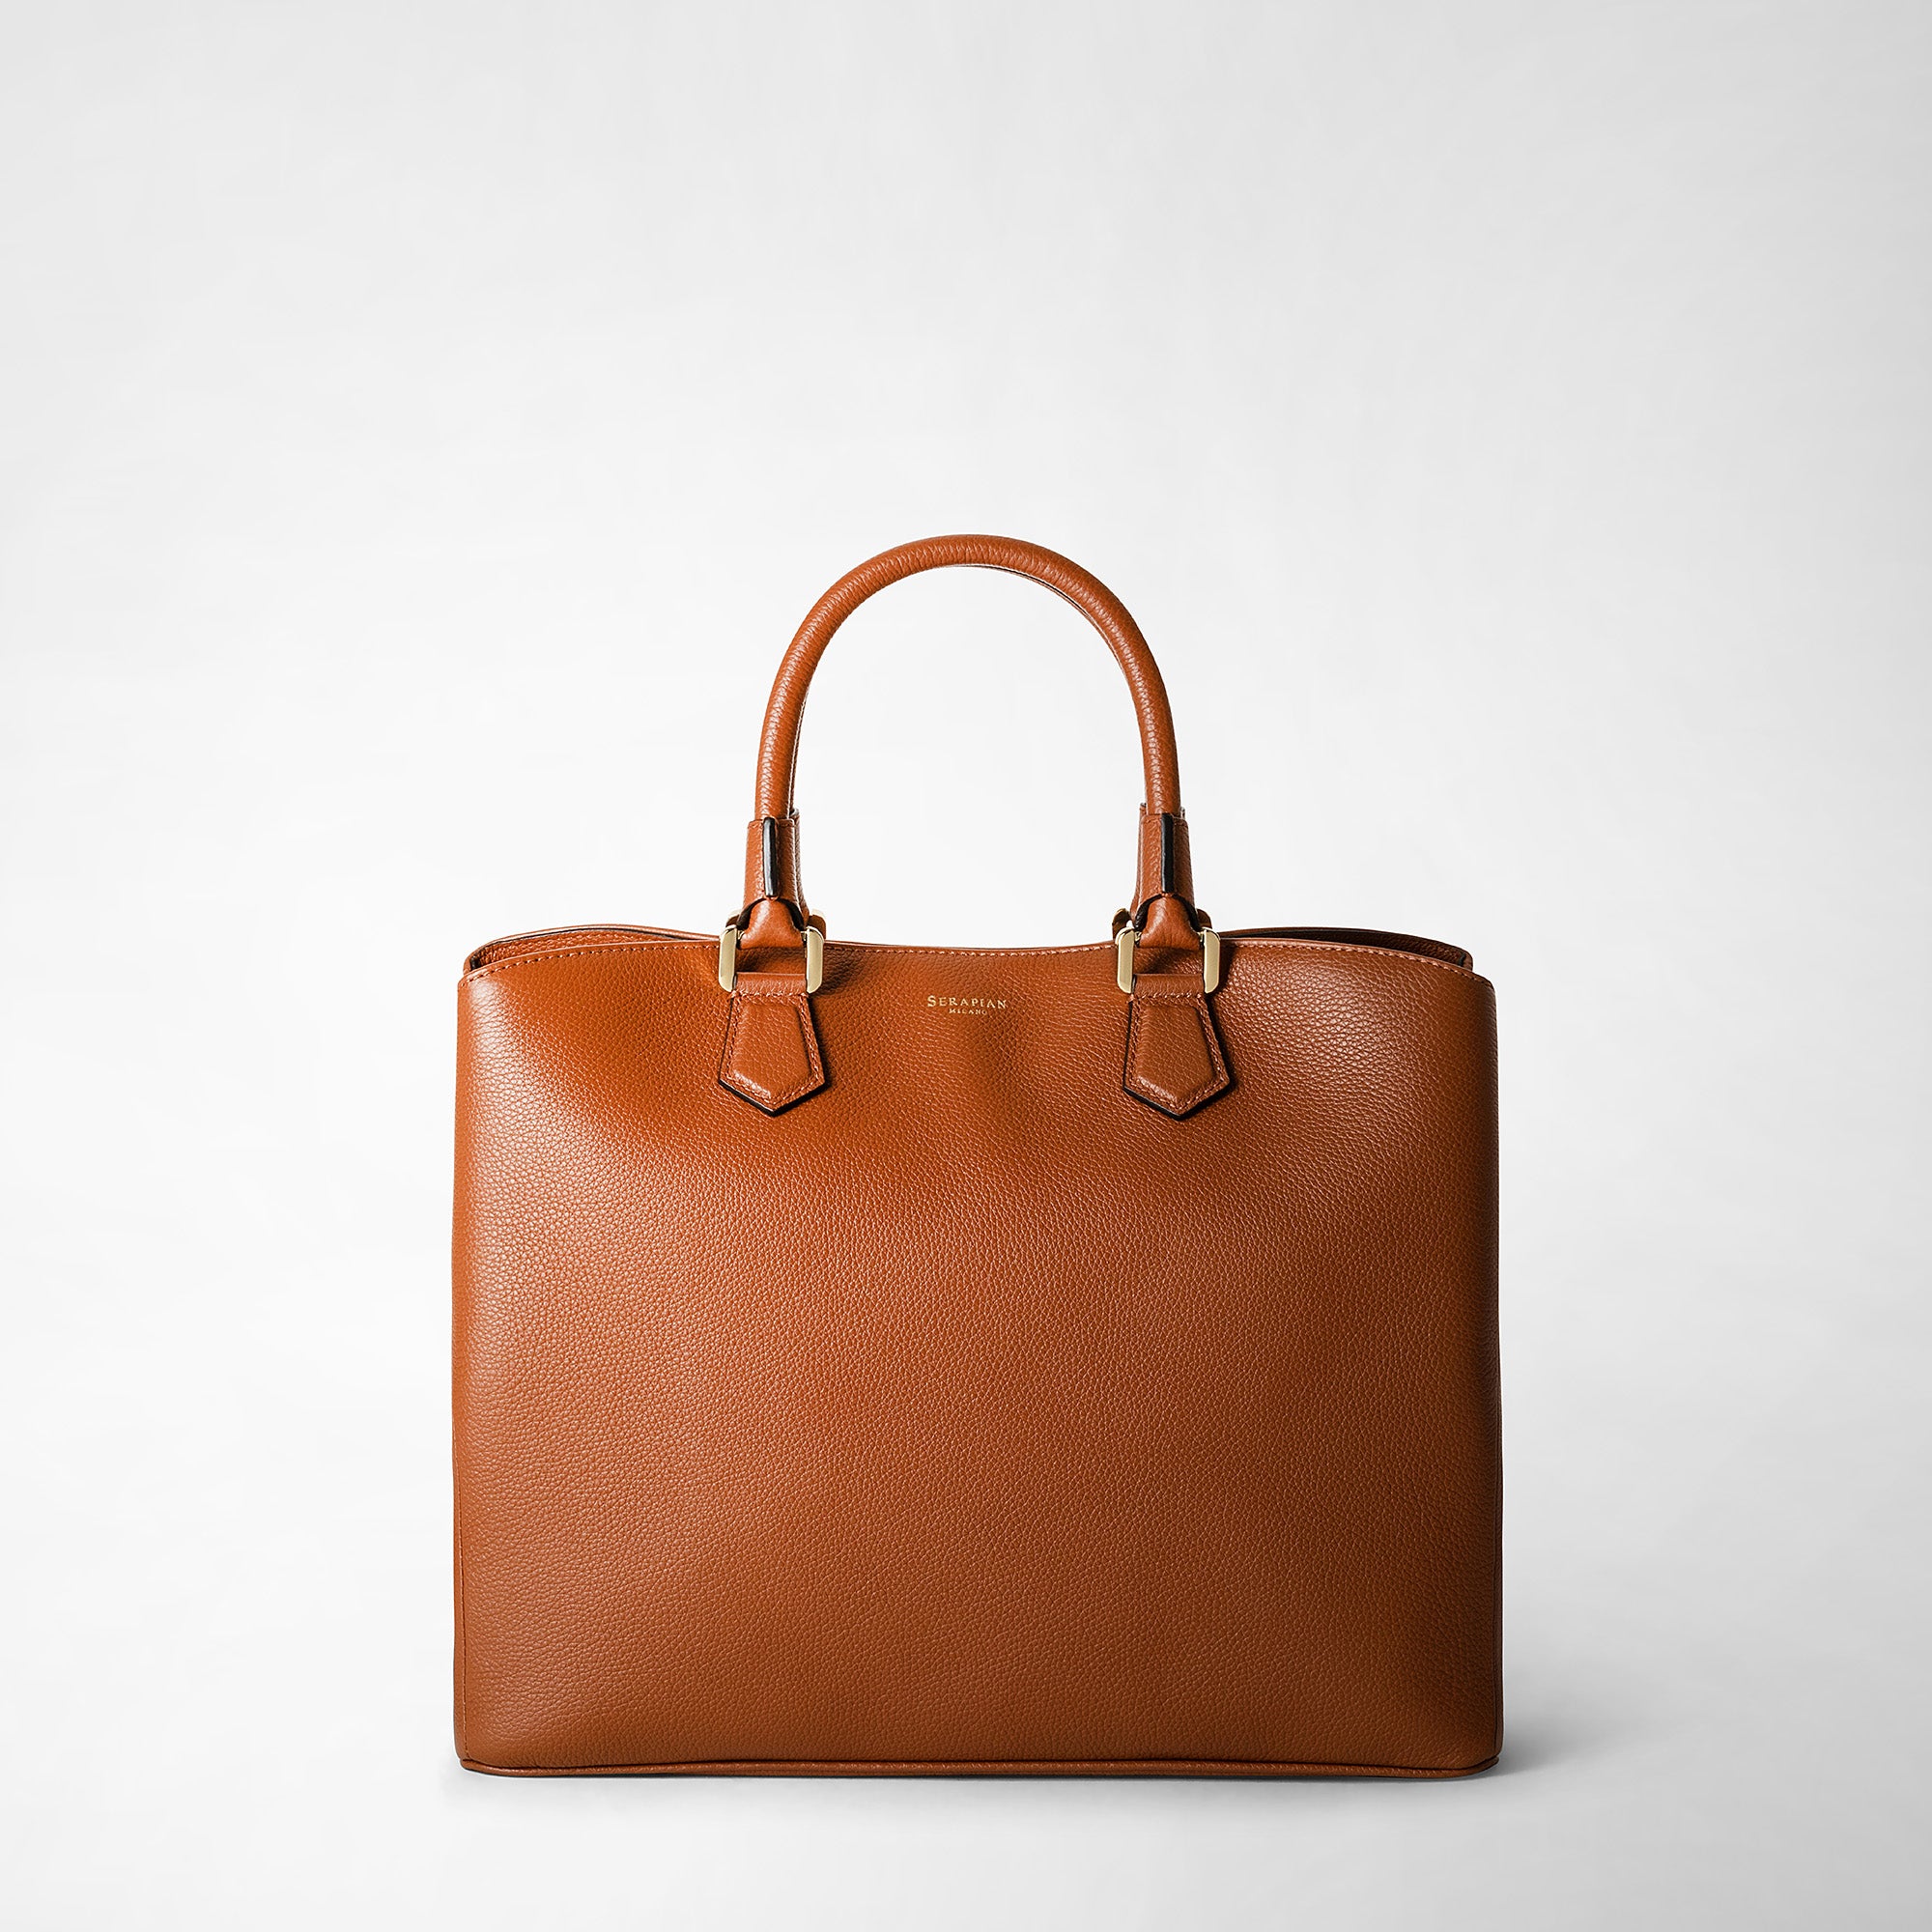 Plat leather handbag